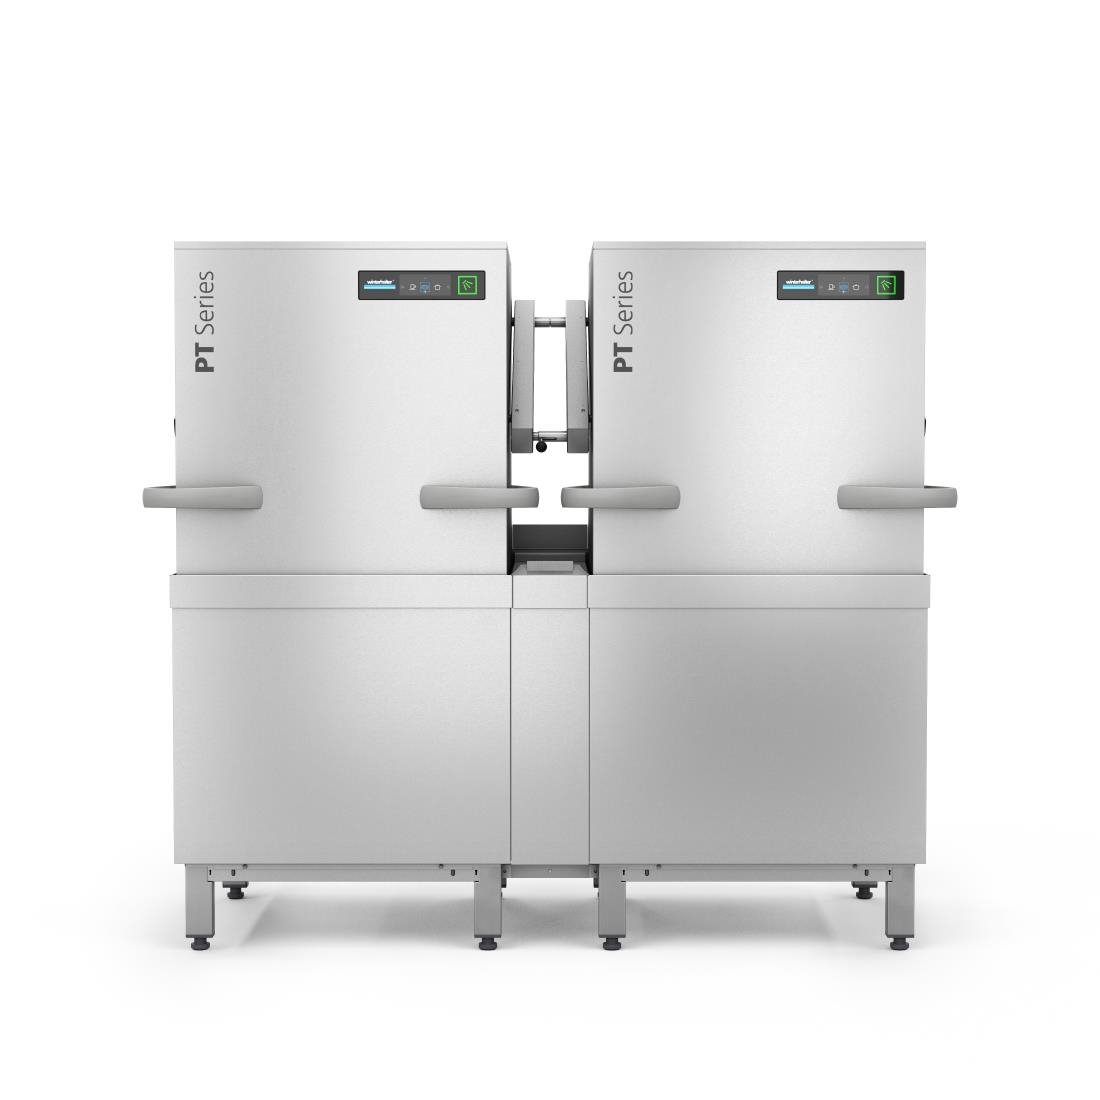 FT532 Winterhalter Energy Saving Pass Through Dishwasher PT-L Energy+ JD Catering Equipment Solutions Ltd